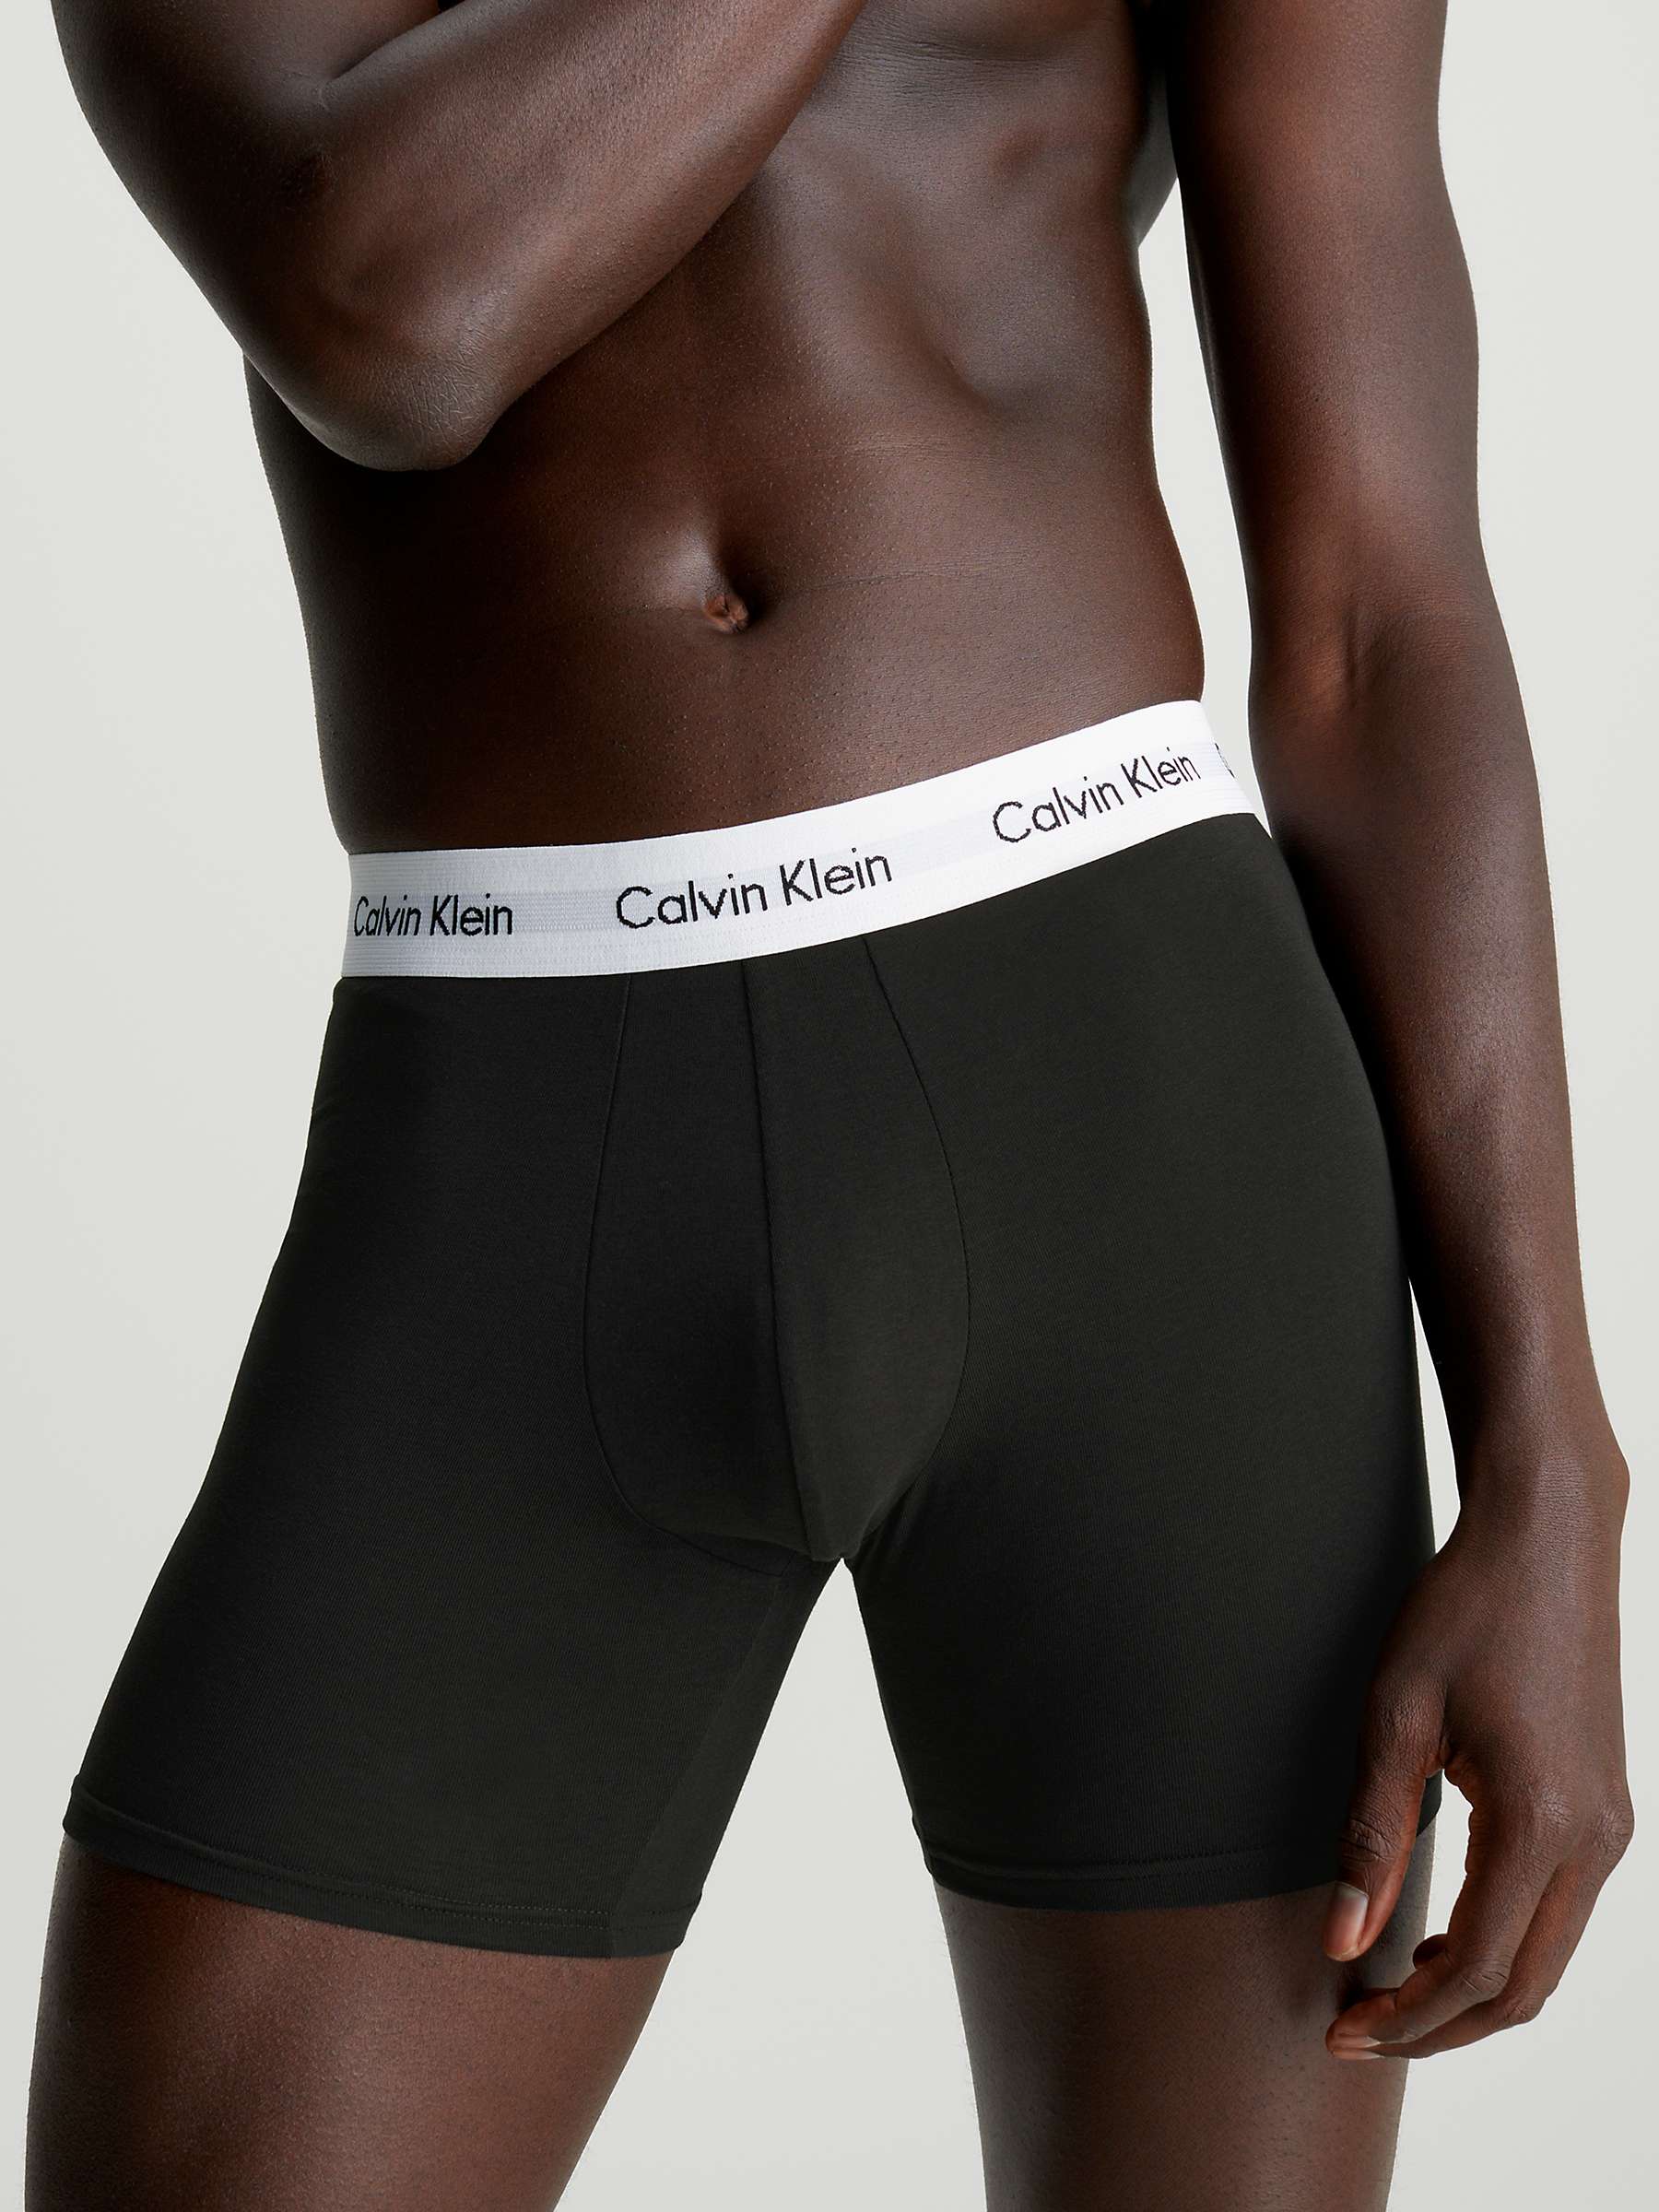 Buy Calvin Klein Boxer Briefs, Pack of 3, Black Online at johnlewis.com